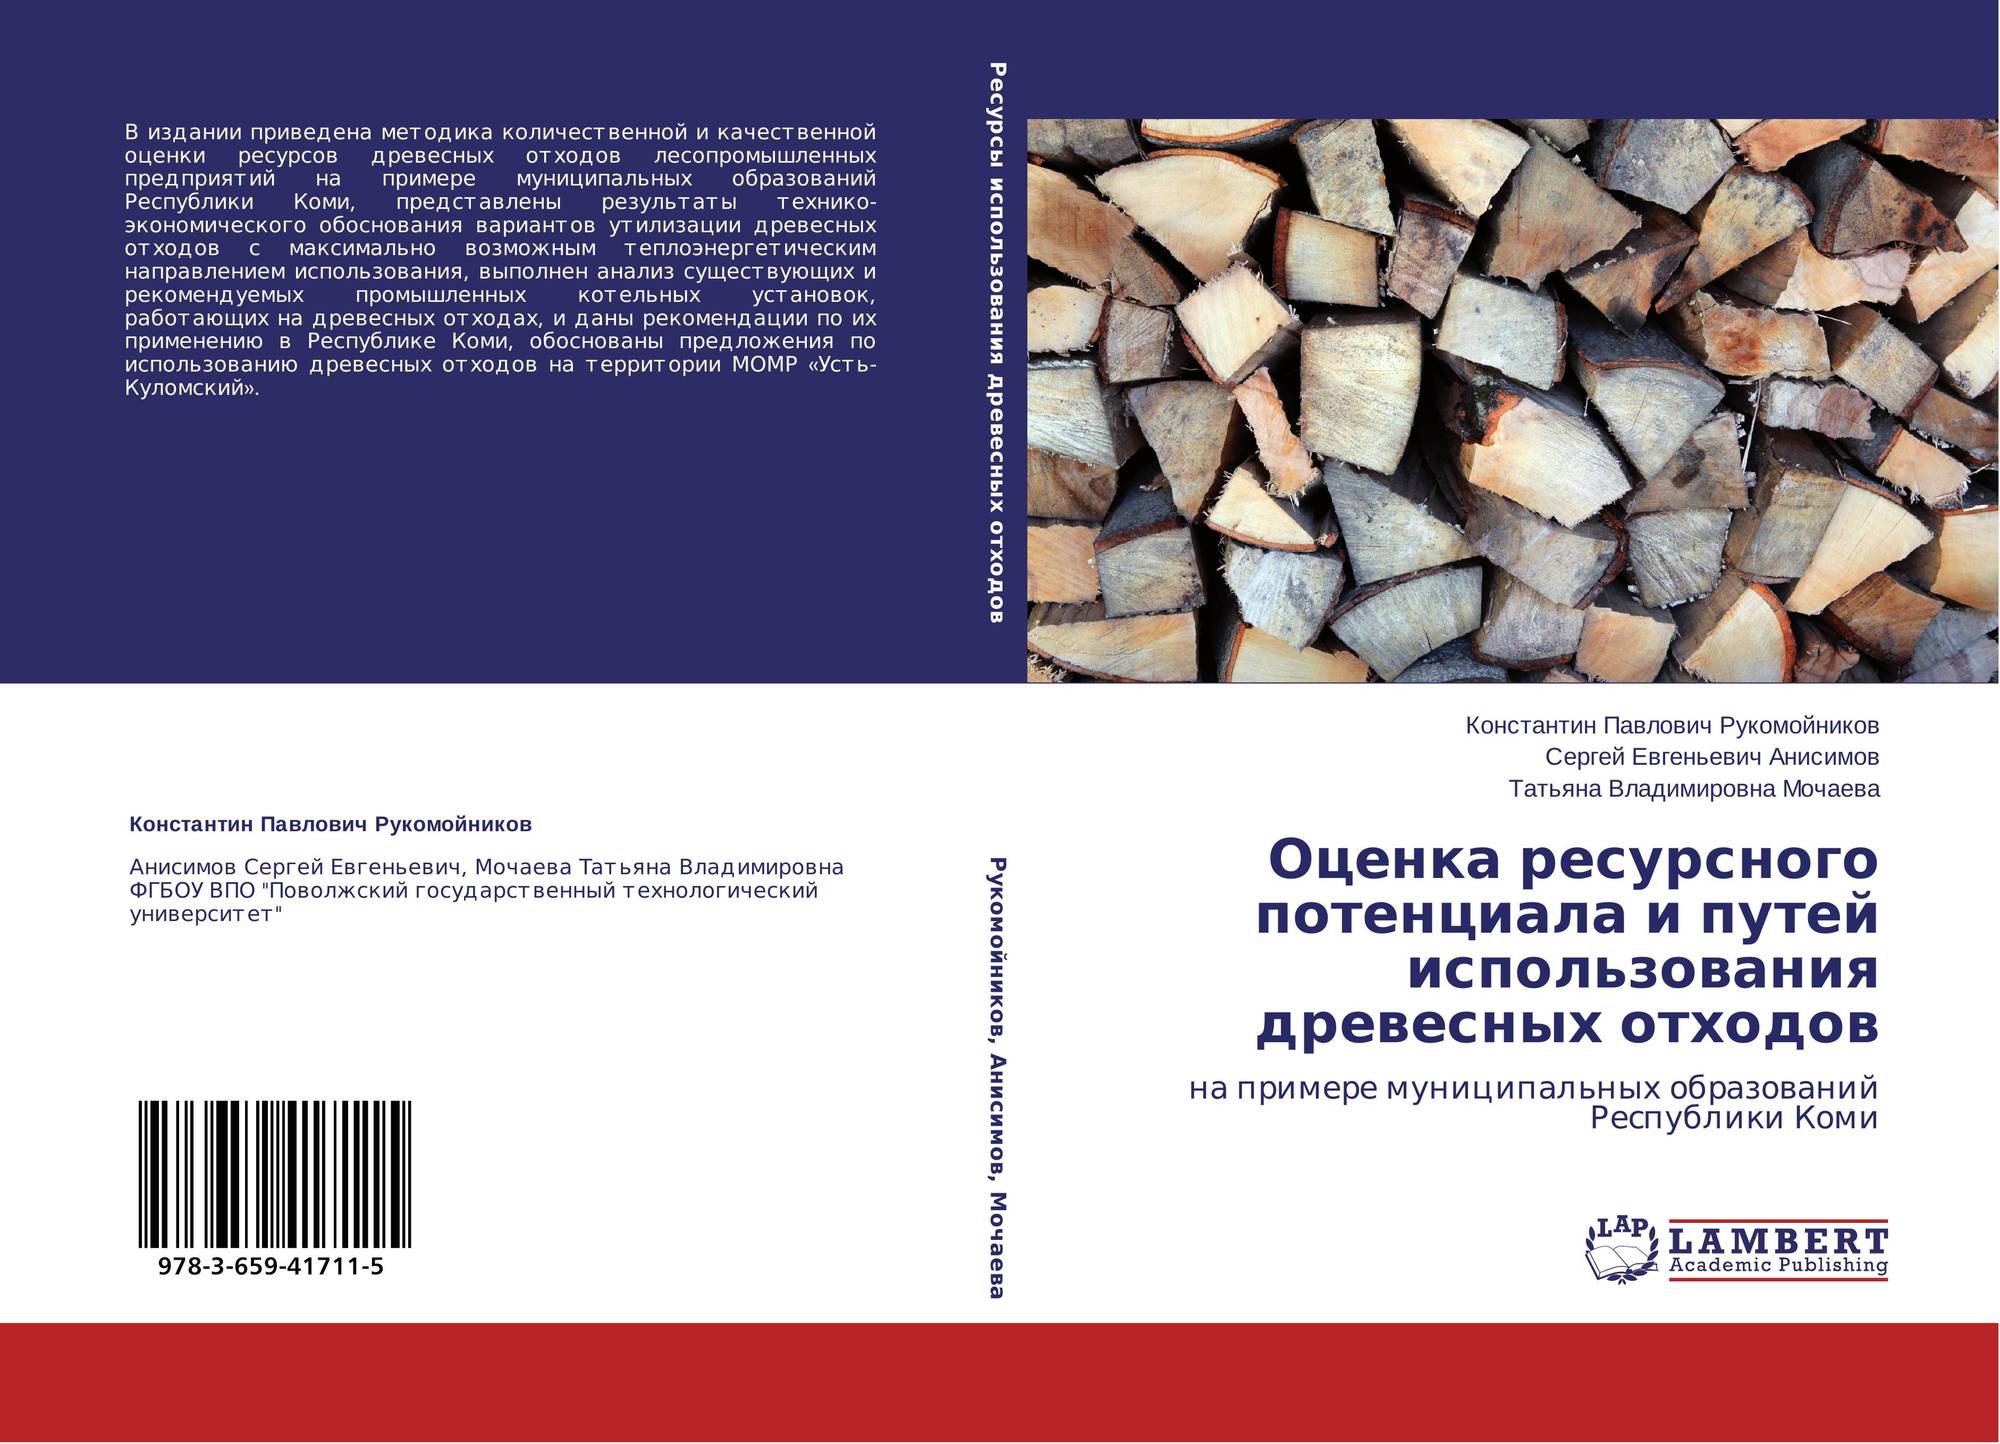 Method book. New methods book. Обложка книги интегралов. Piptadeniastrum africanum. Russian Export book.